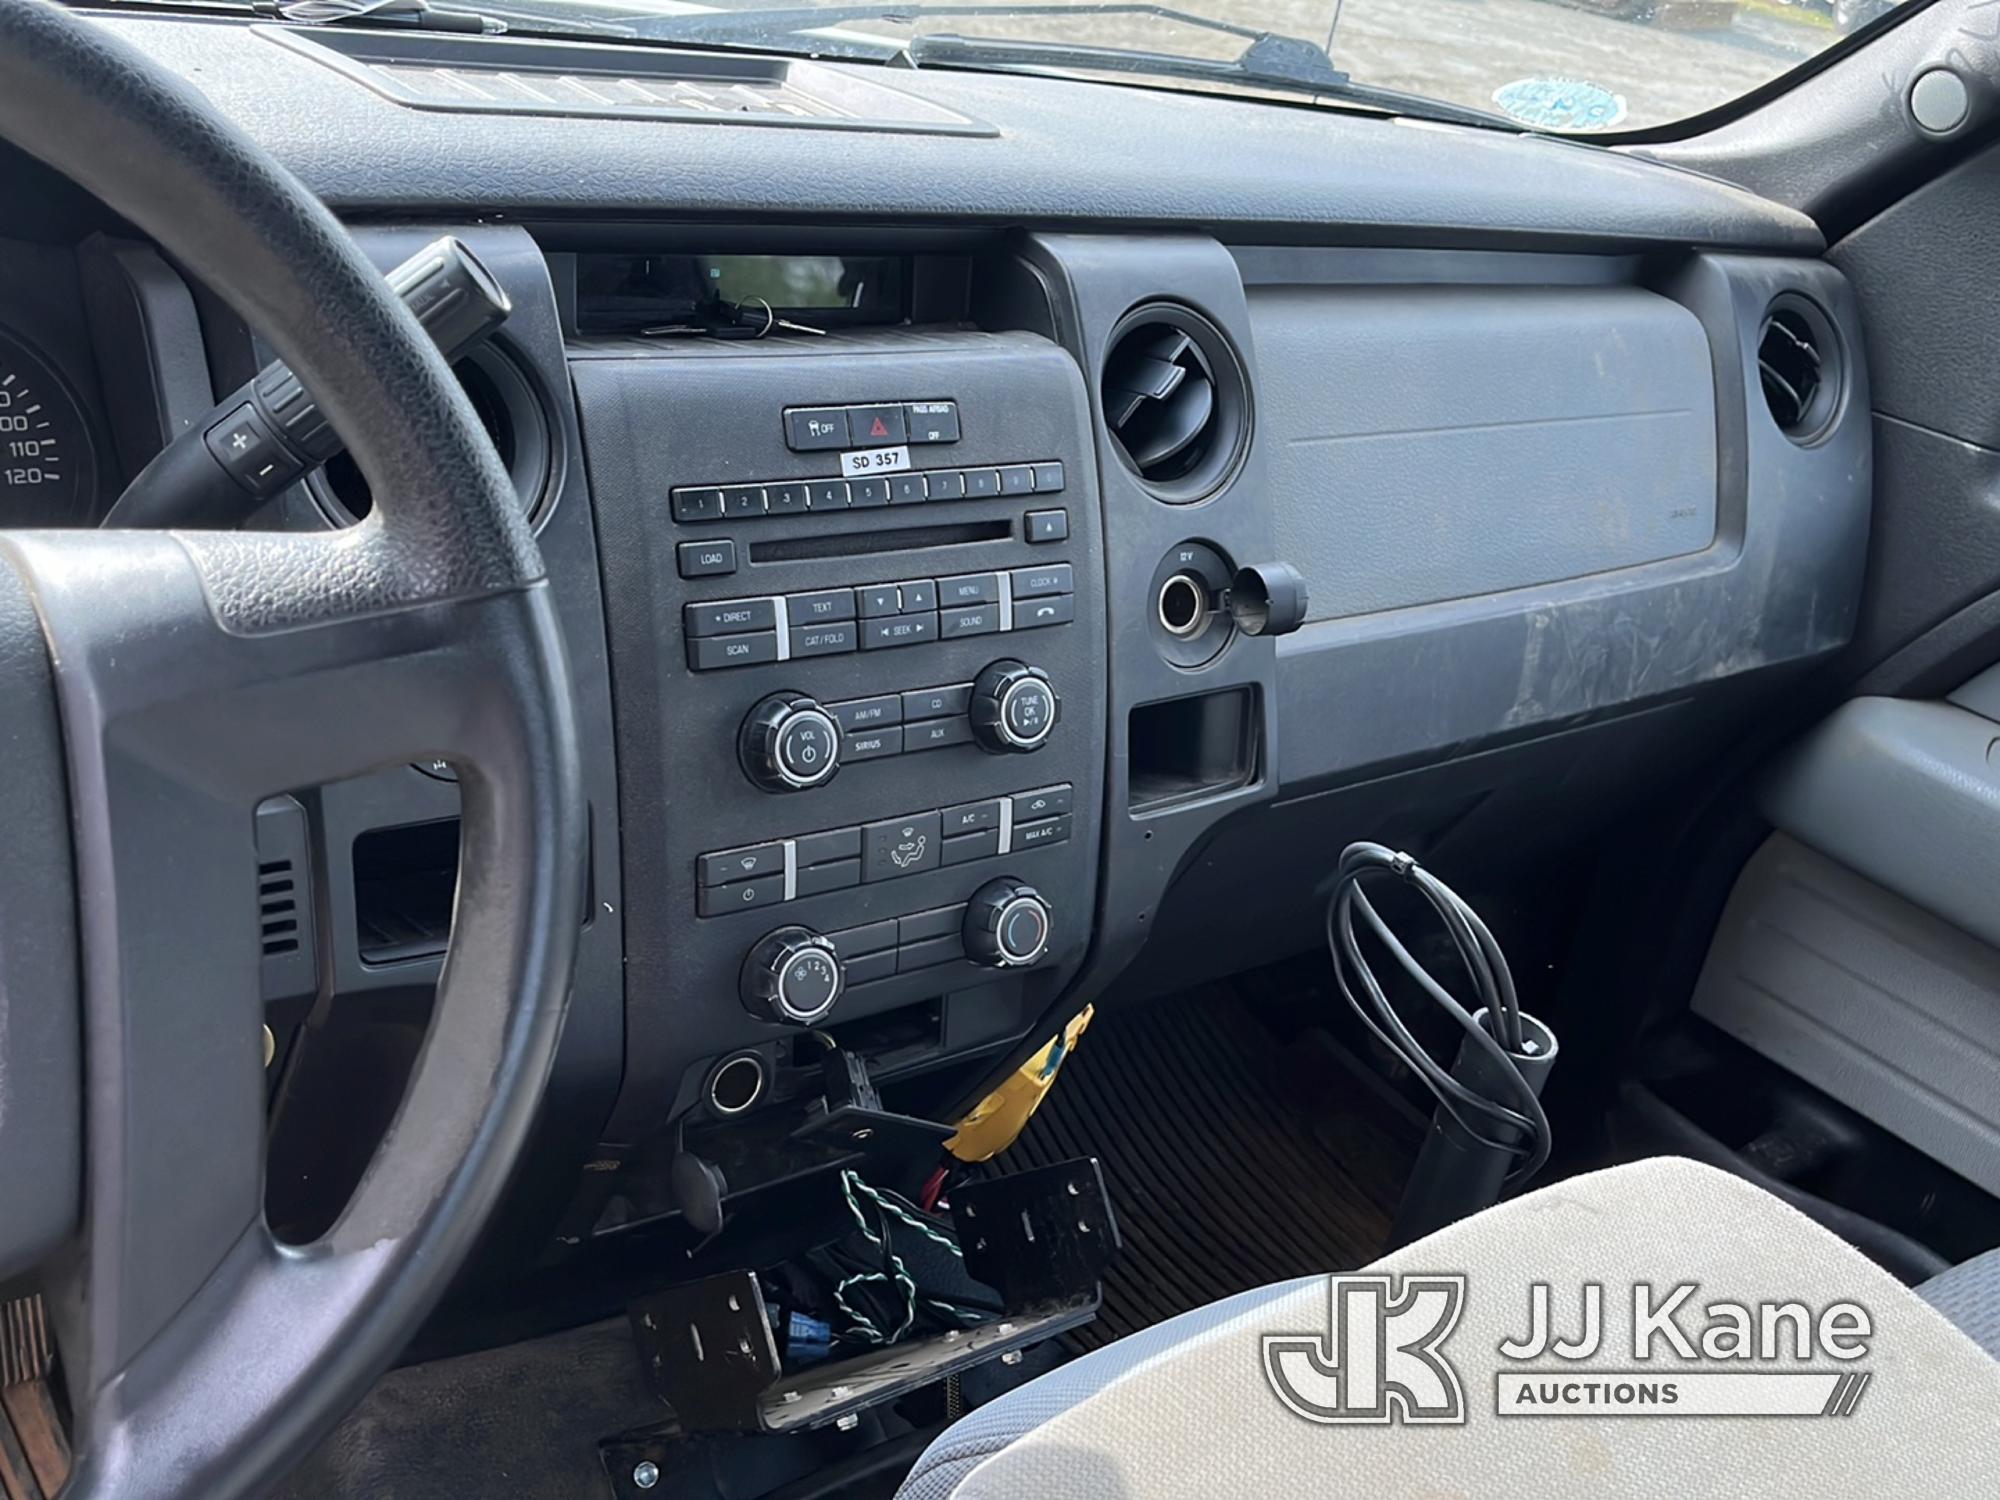 (Charlotte, NC) 2013 Ford F150 4x4 Extended-Cab Pickup Truck Duke Unit) (Runs & Moves) (Paint Damage